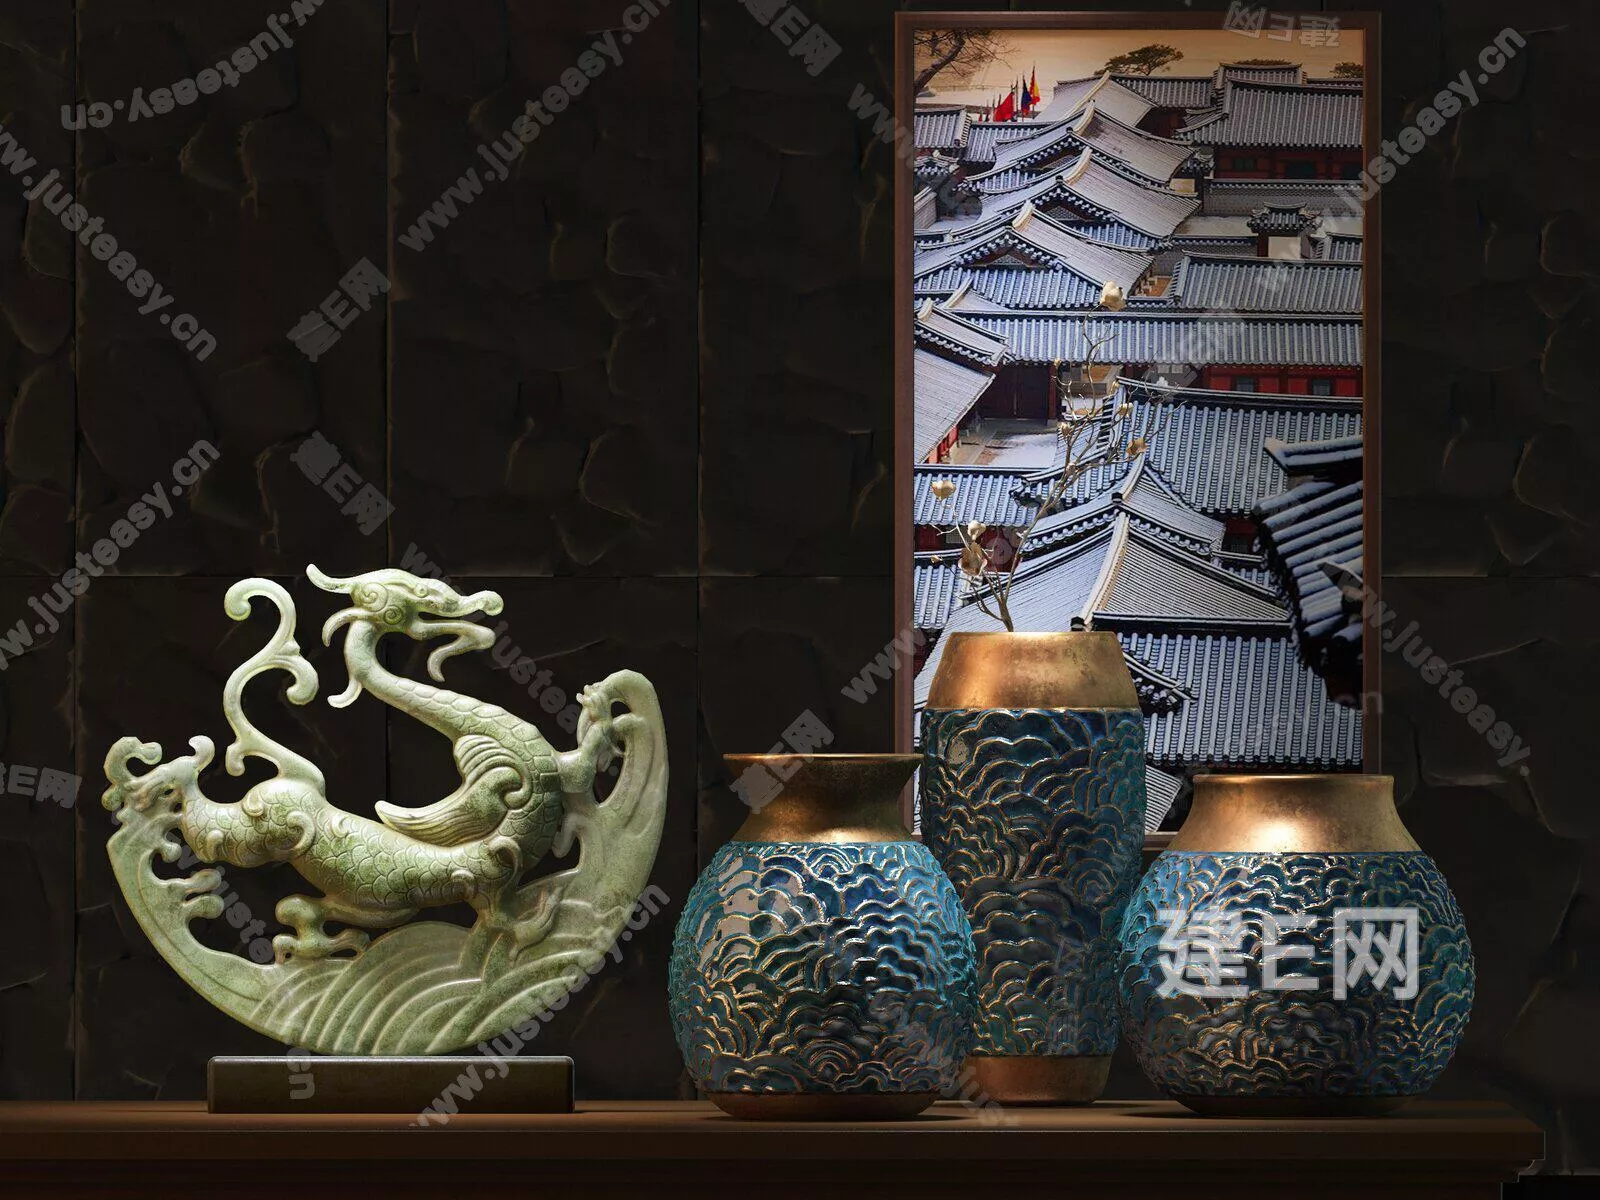 CHINESE FURNITURE - SKETCHUP 3D MODEL - ENSCAPE - 102910396